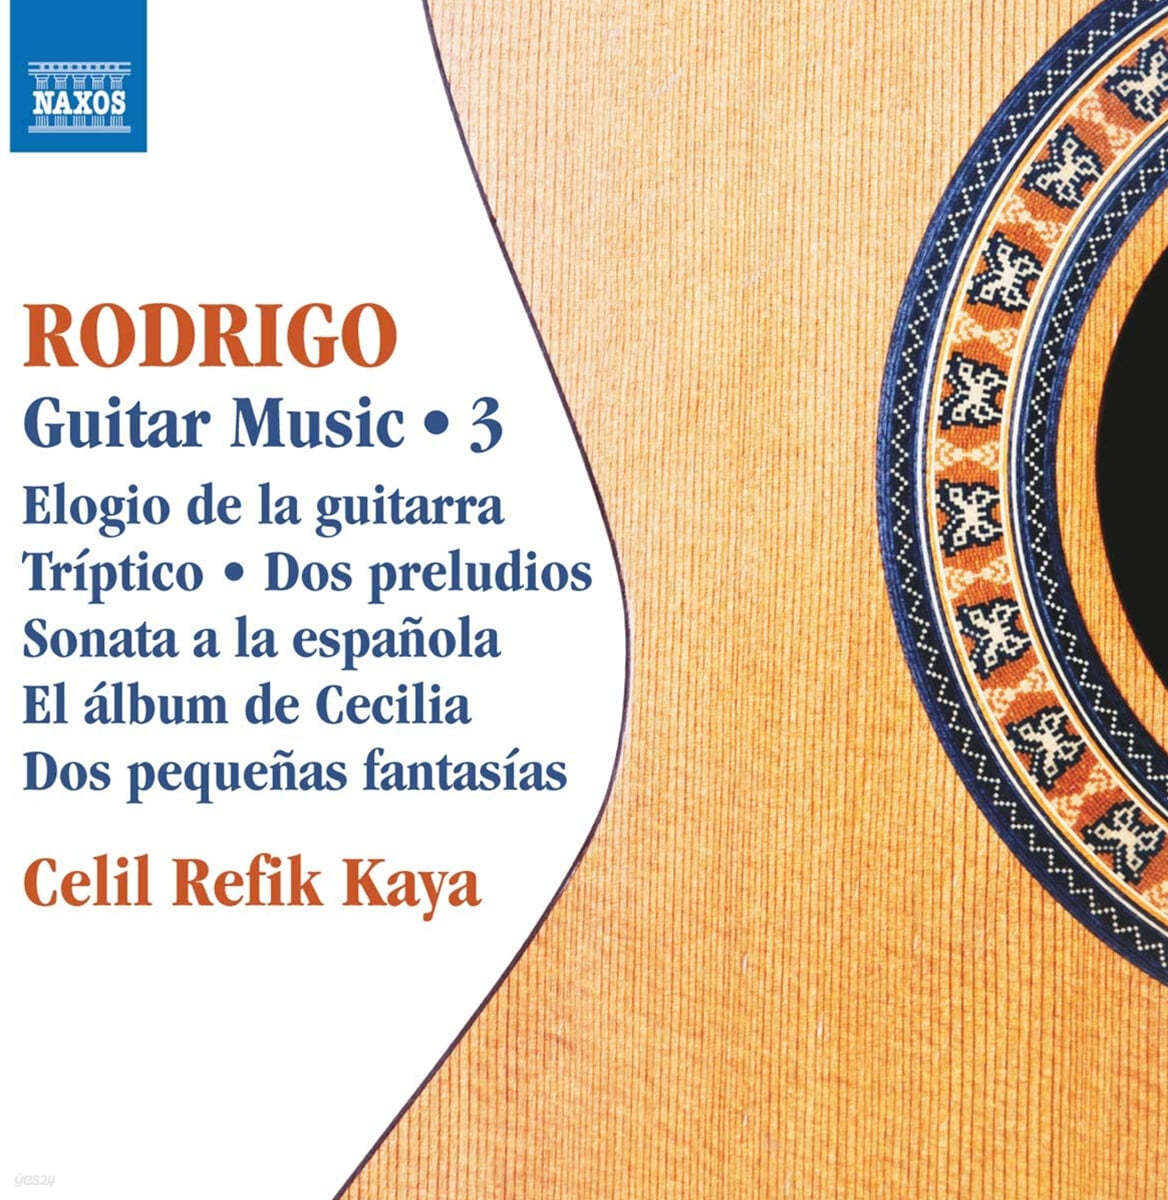 Celil Refik Kaya 로드리고: 기타 작품 3집 (Rodrigo: Guitar Music Volume 3) 